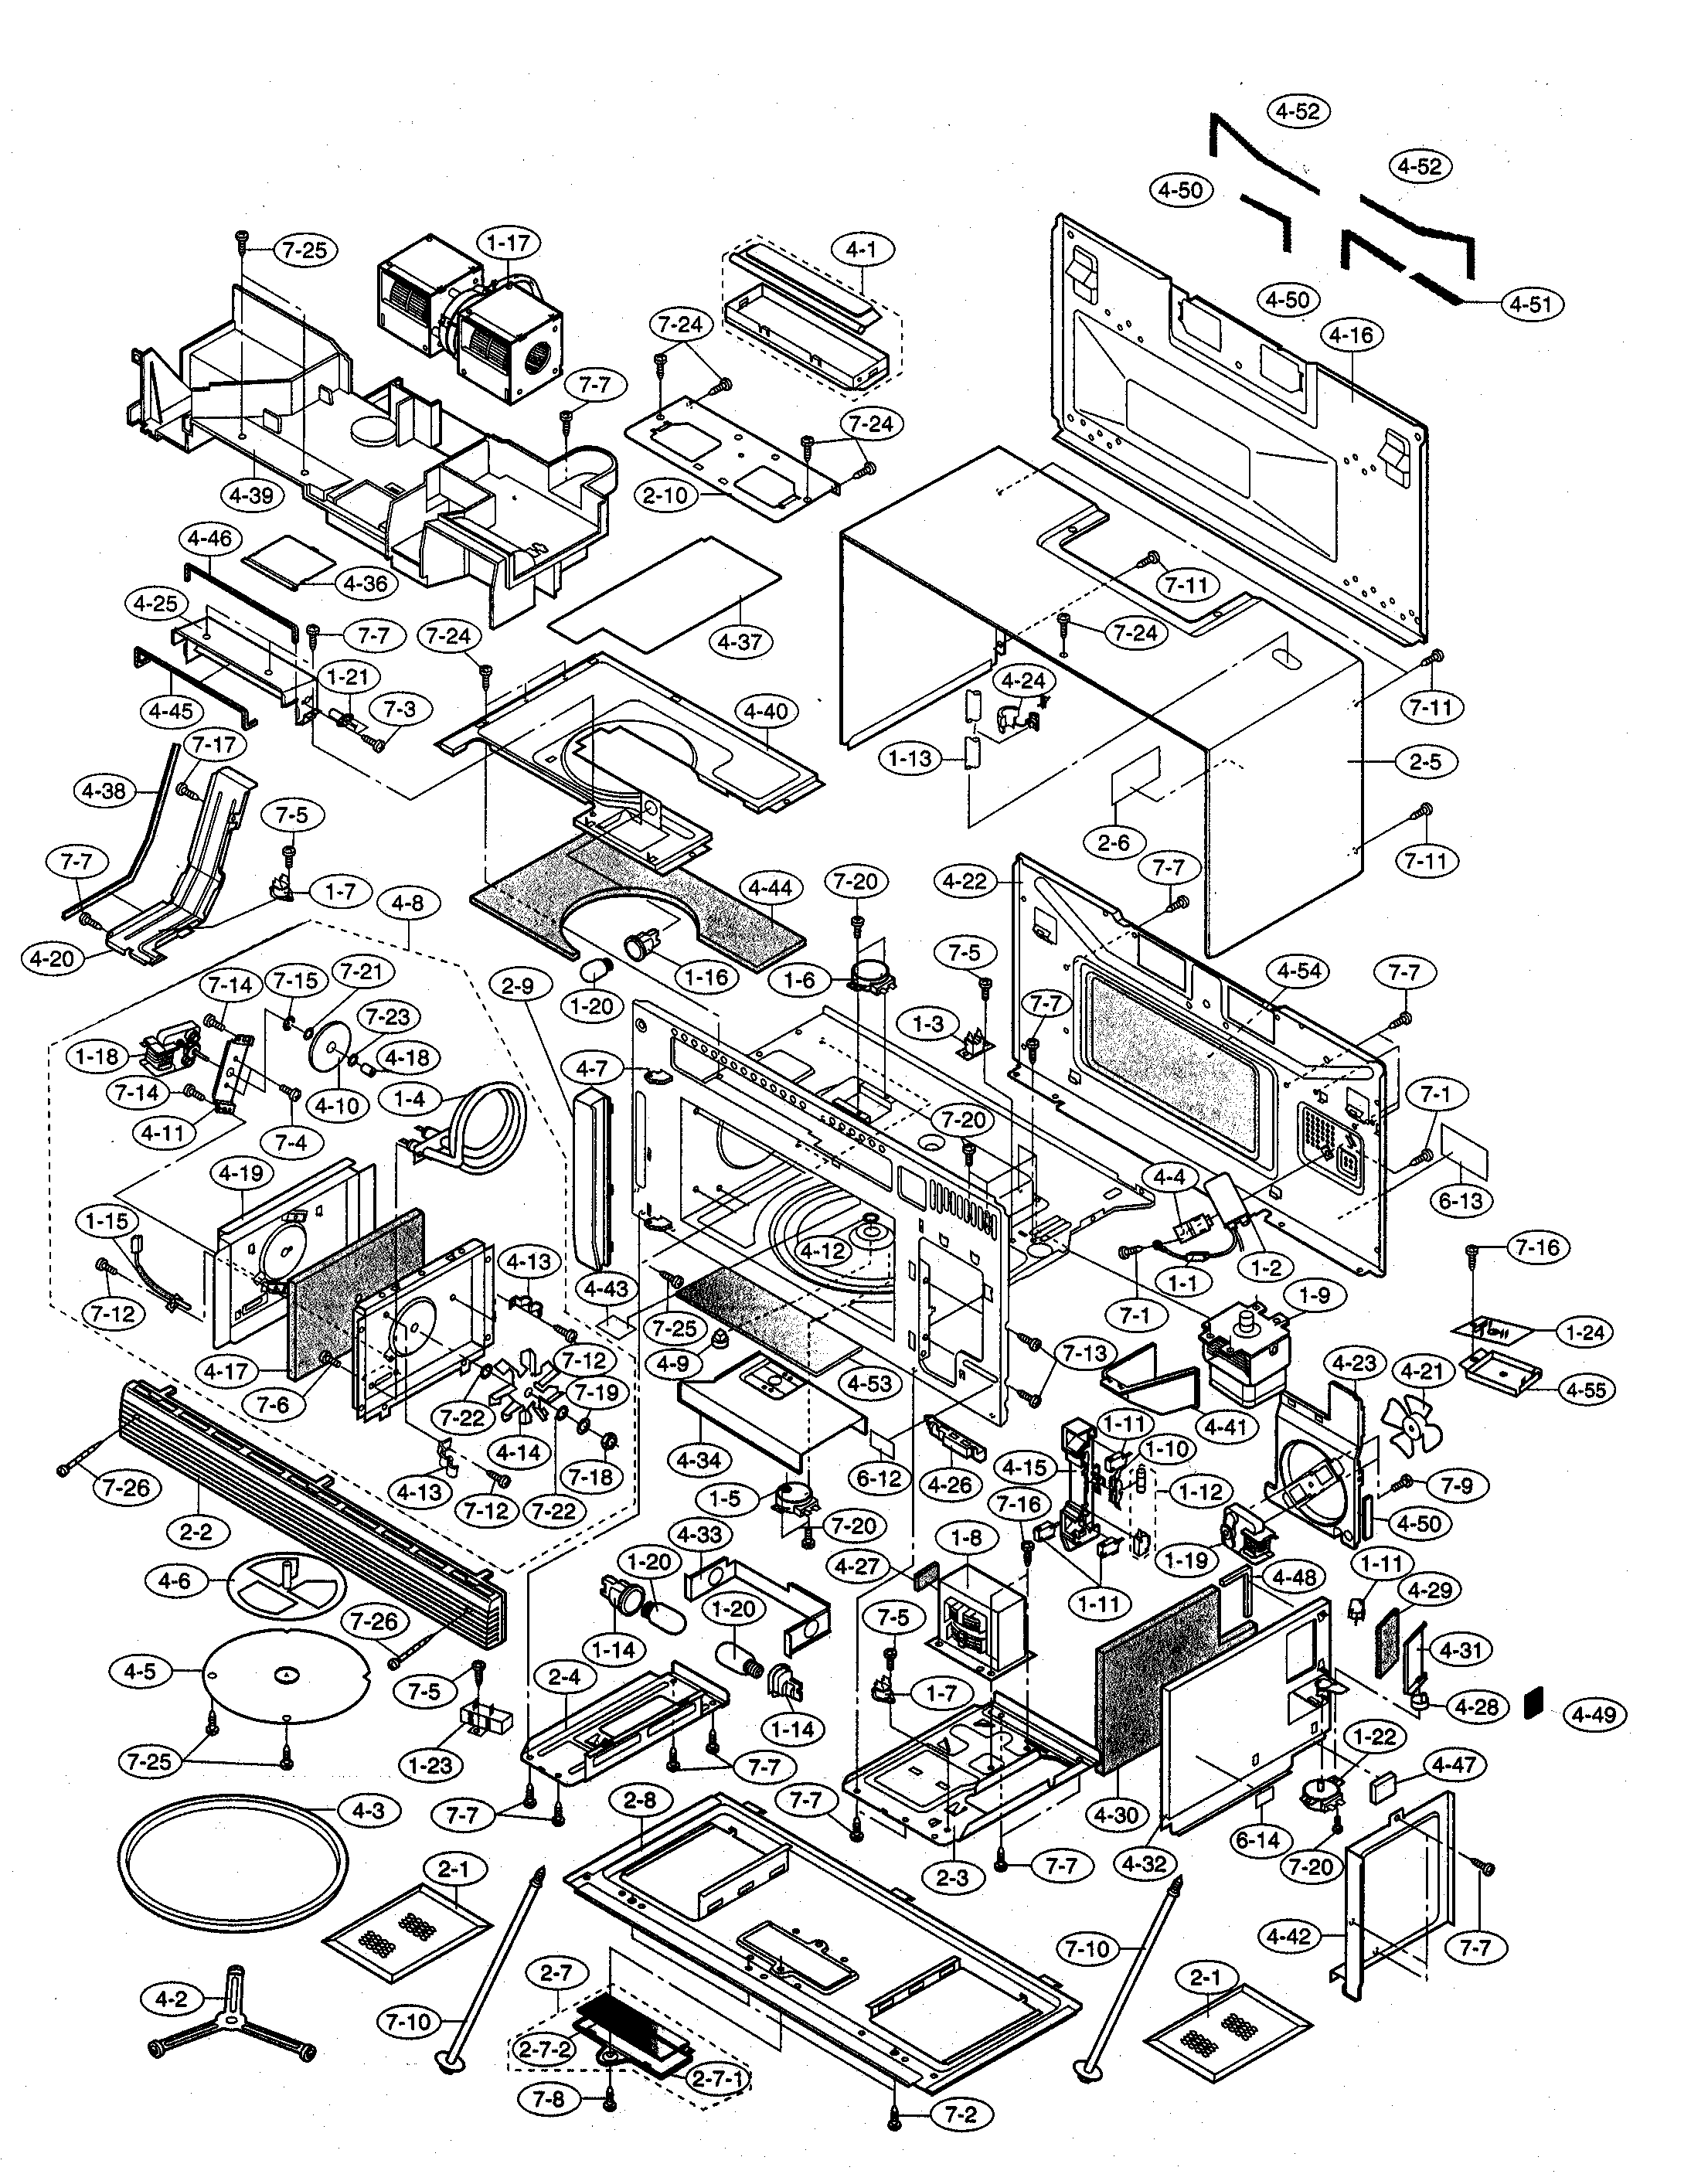 31 Sharp Carousel Microwave Parts Diagram - Wiring Diagram List